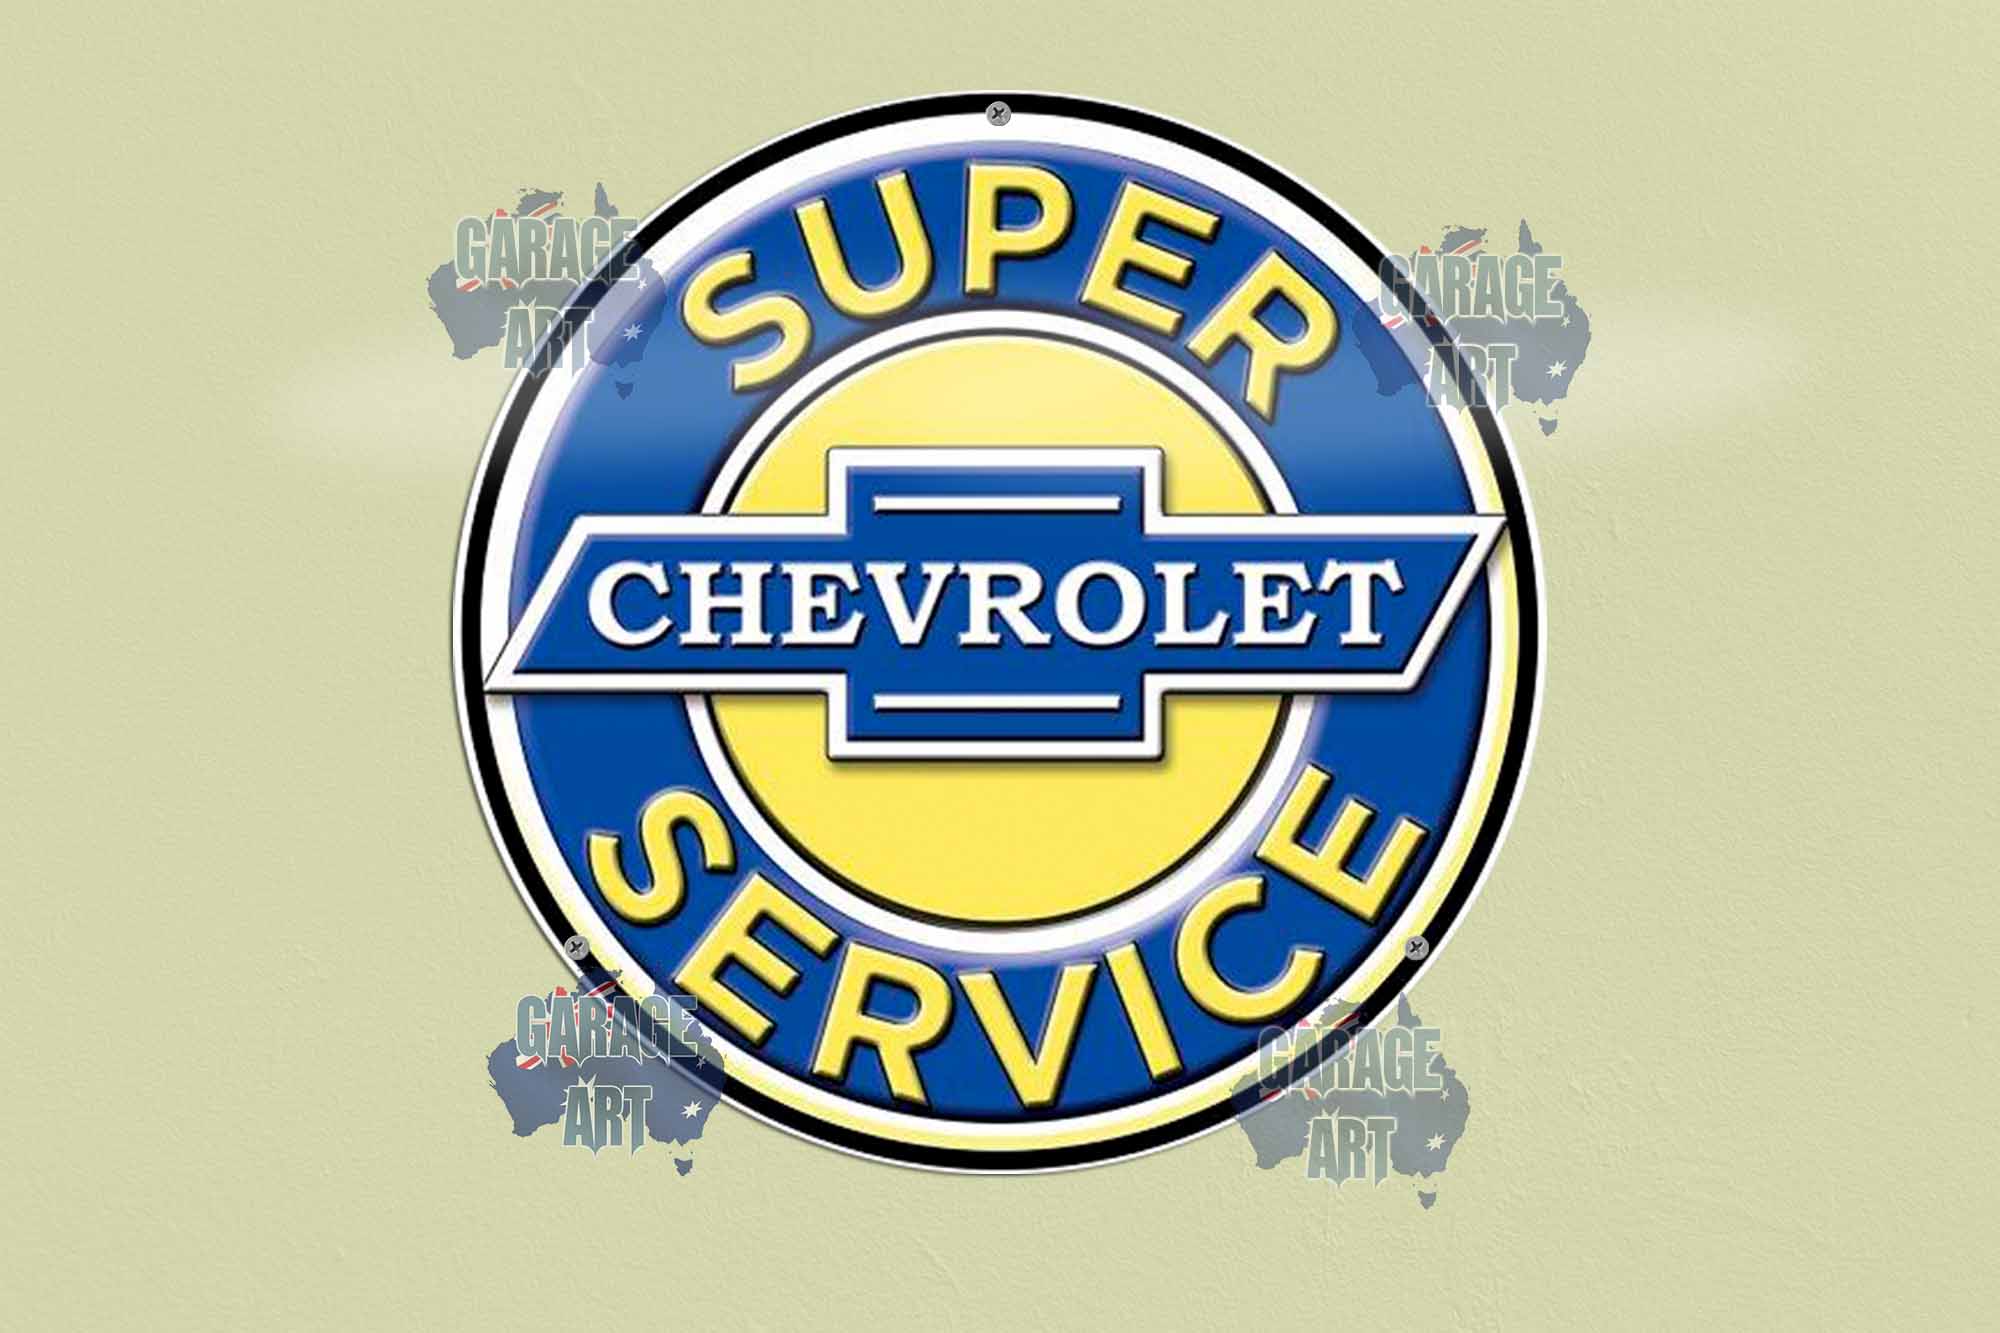 Chevrolet Sales and Service 355mmDia 355mmDia Tin Sign freeshipping - garageartaustralia